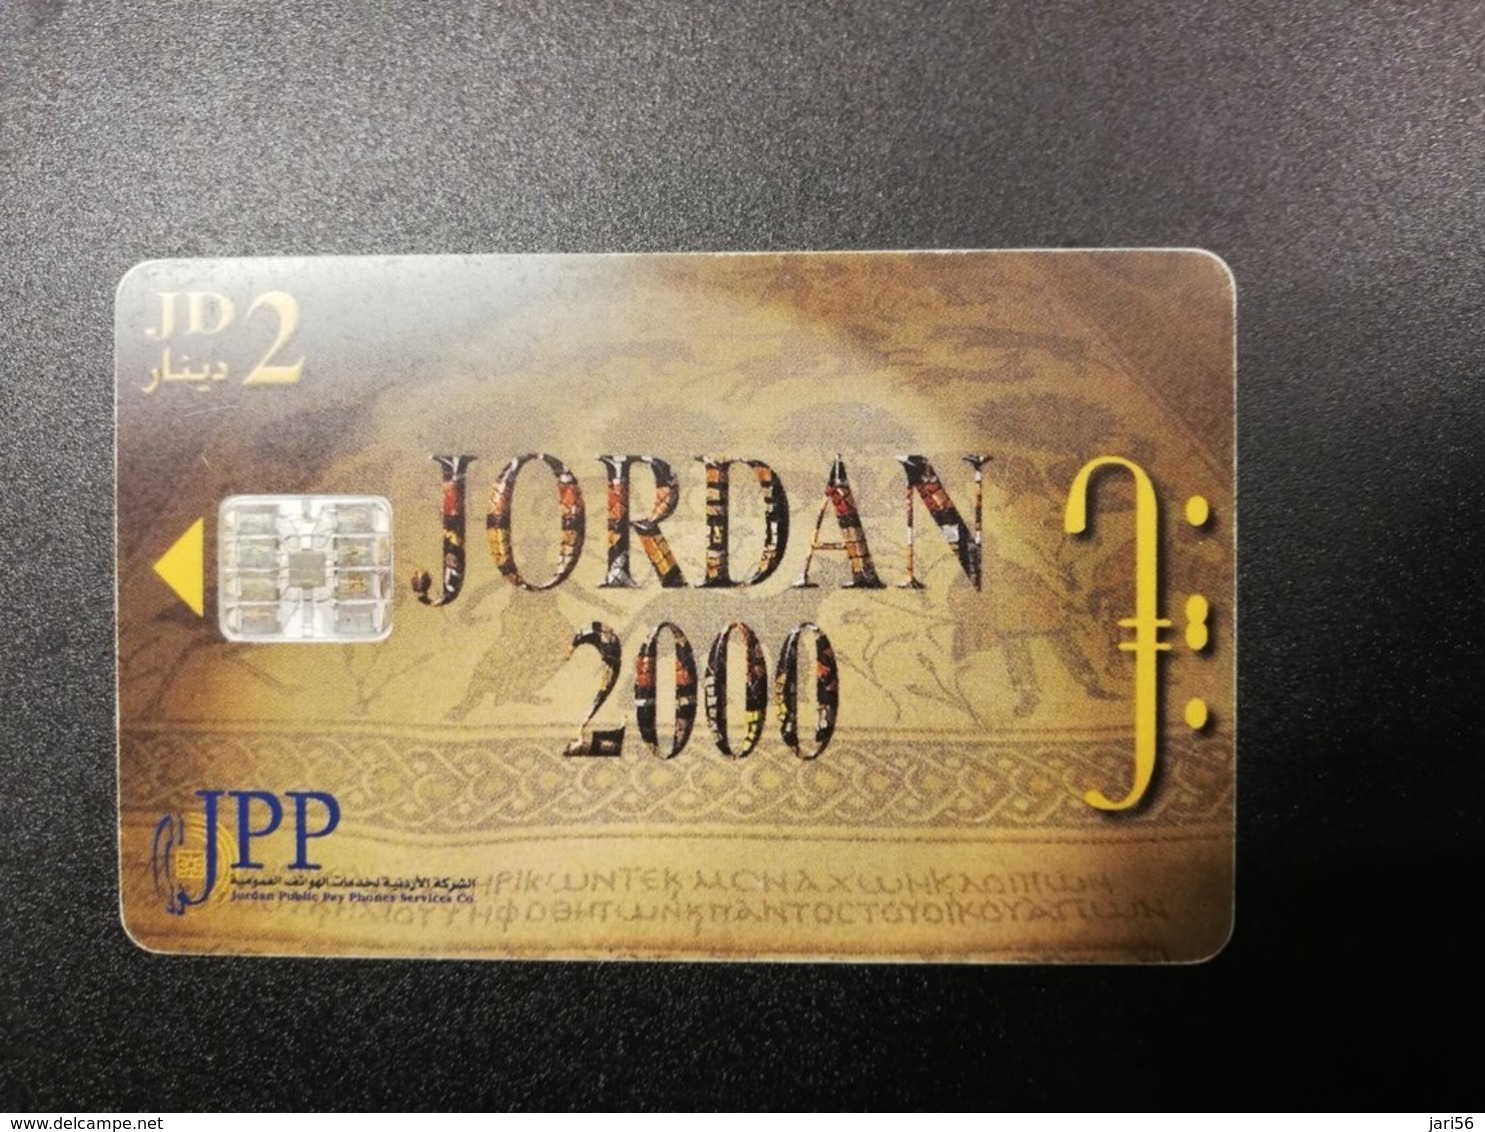 JORDANIE  Nice Used  CHIPCARD      ** 394*** - Jordan